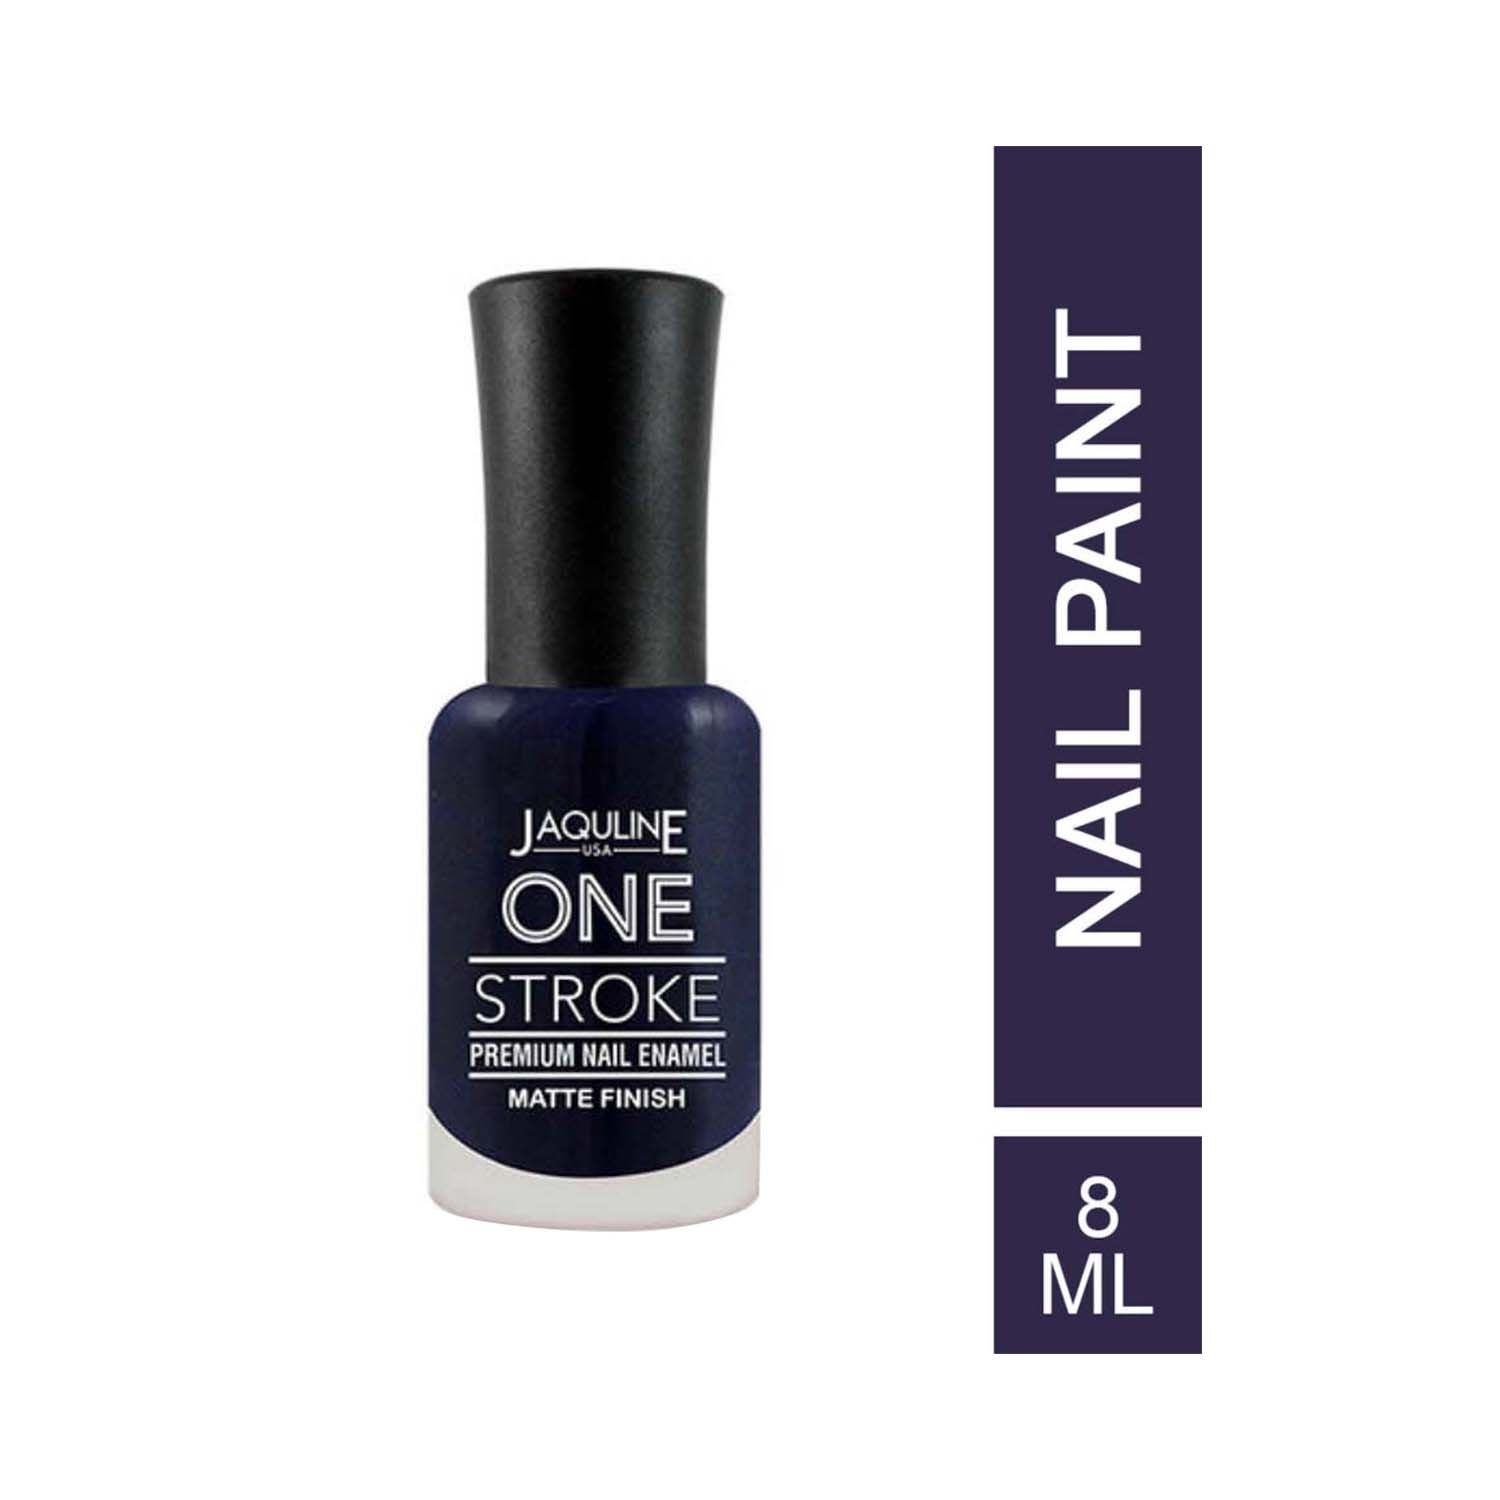 Jaquline USA One Stroke Premium Nail Enamel - J24 So Blue (8ml)